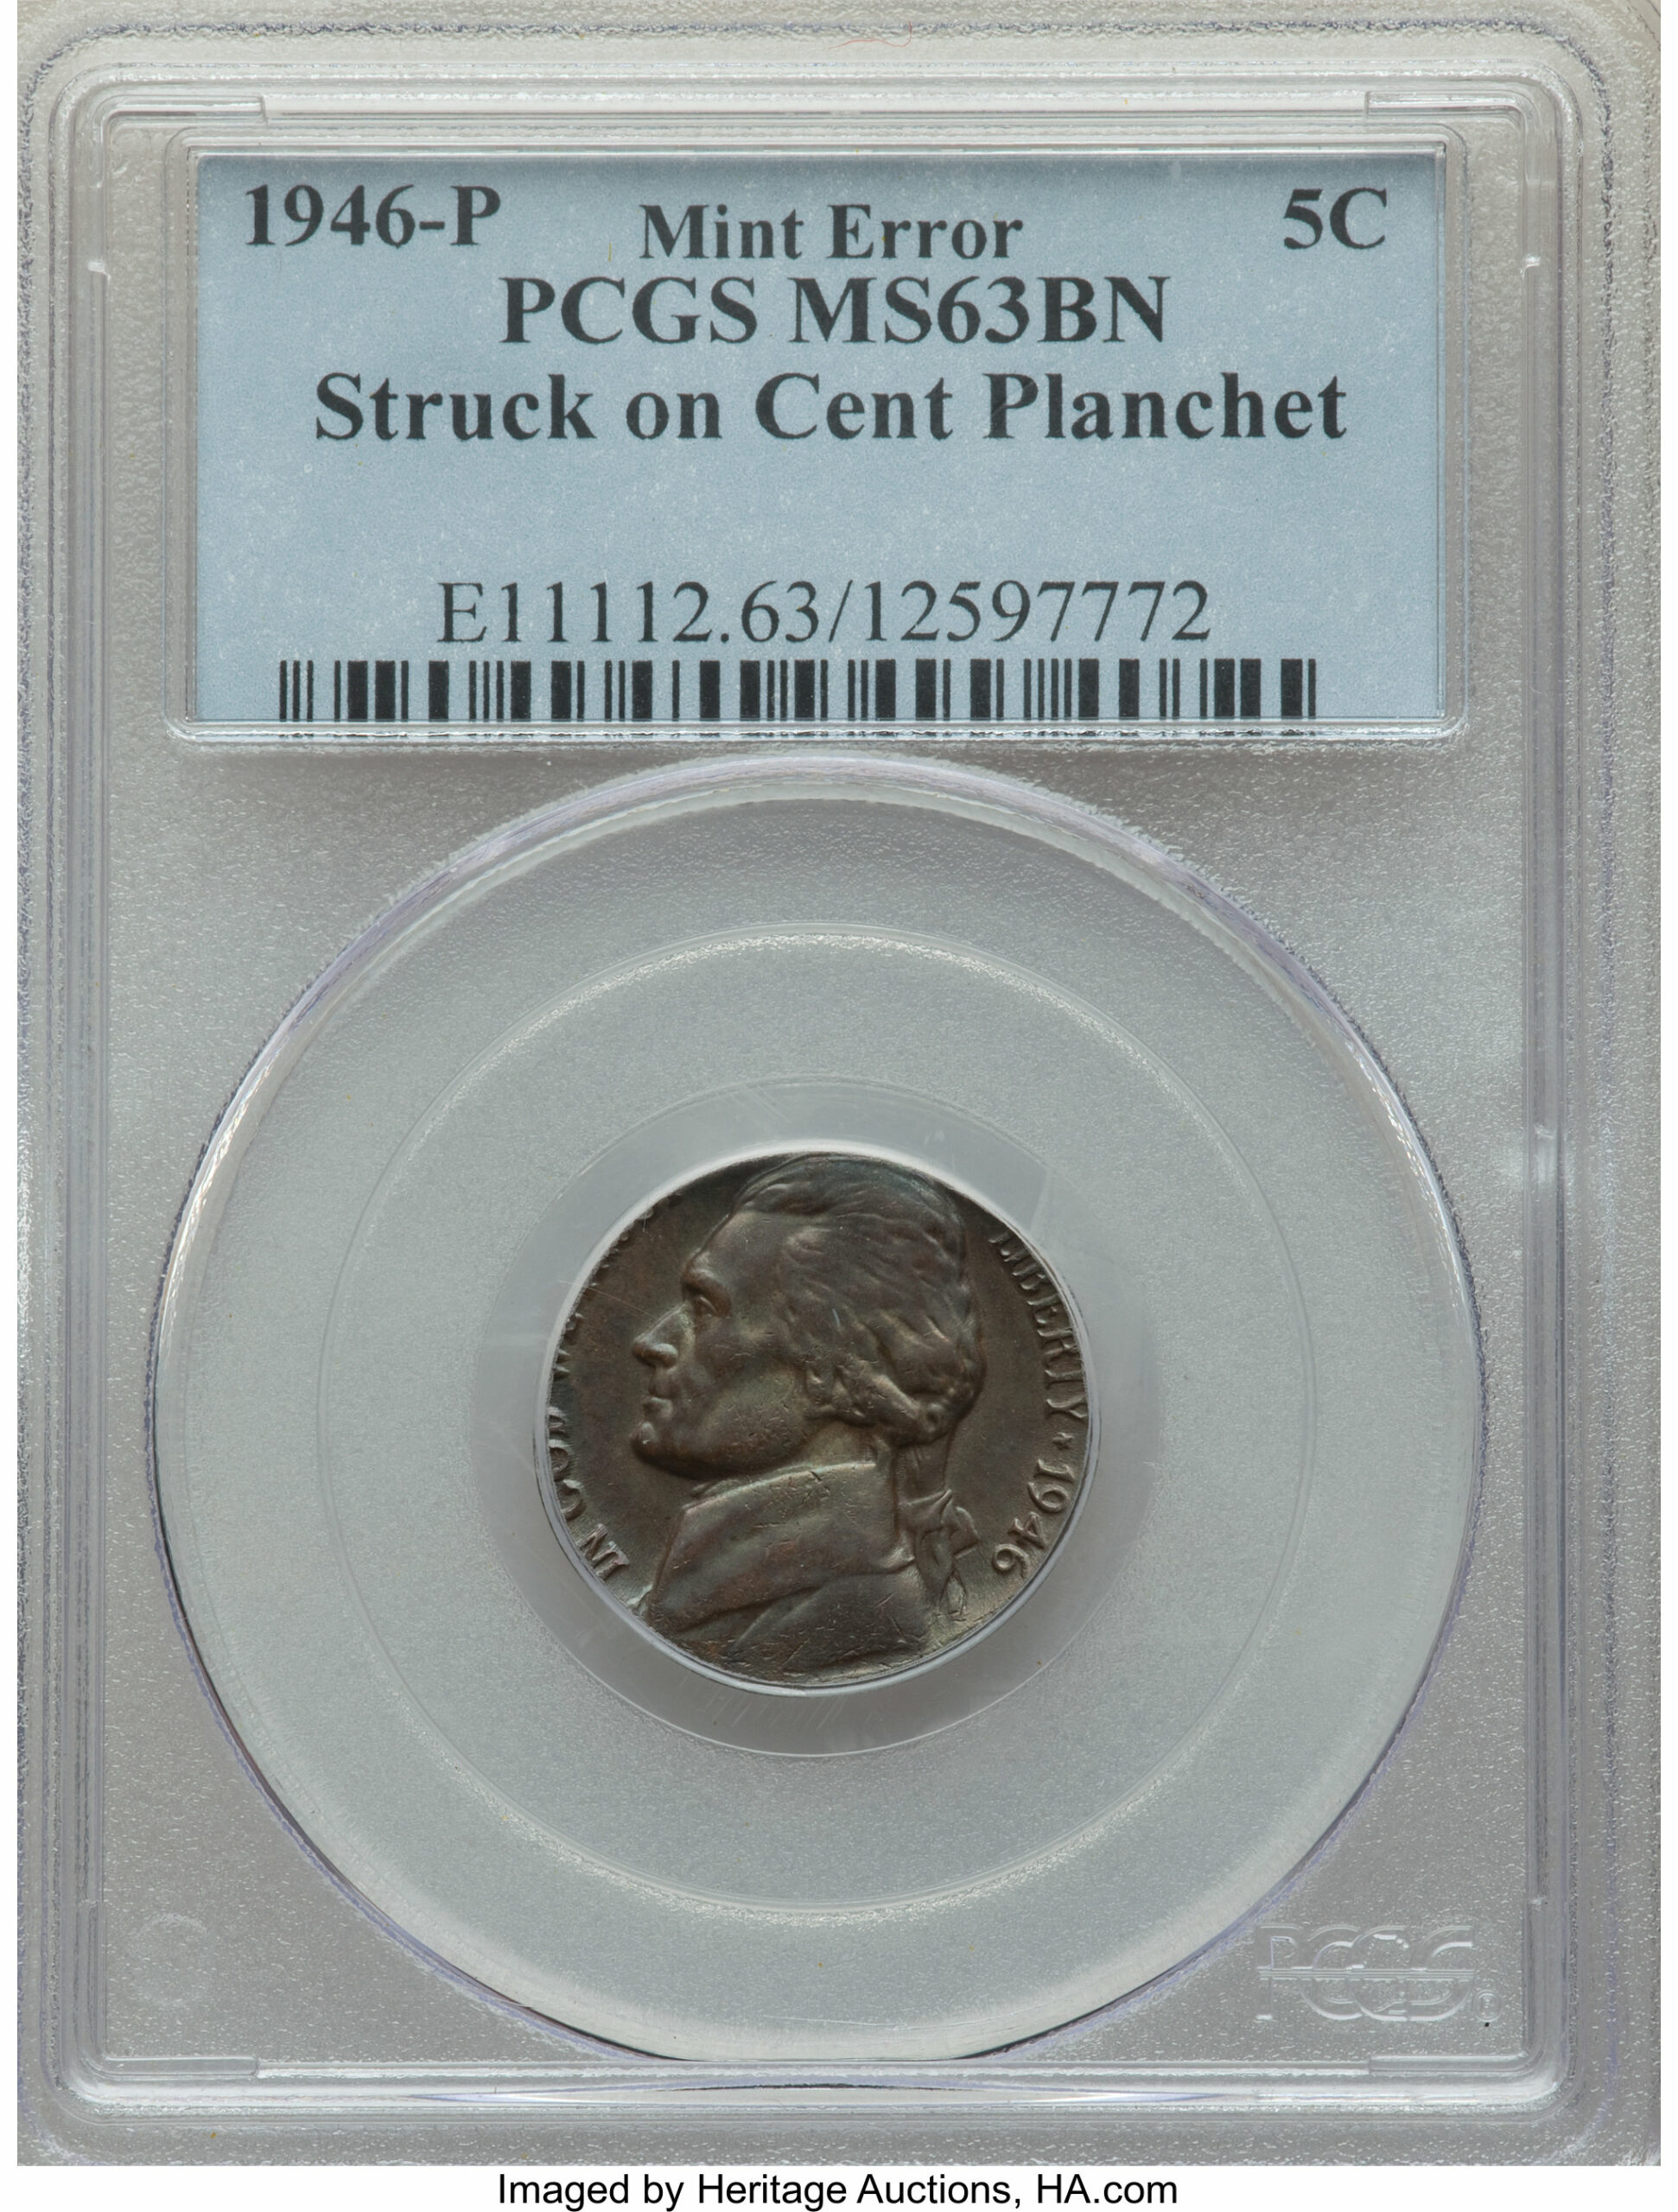 Nickel struck on a silver planchet